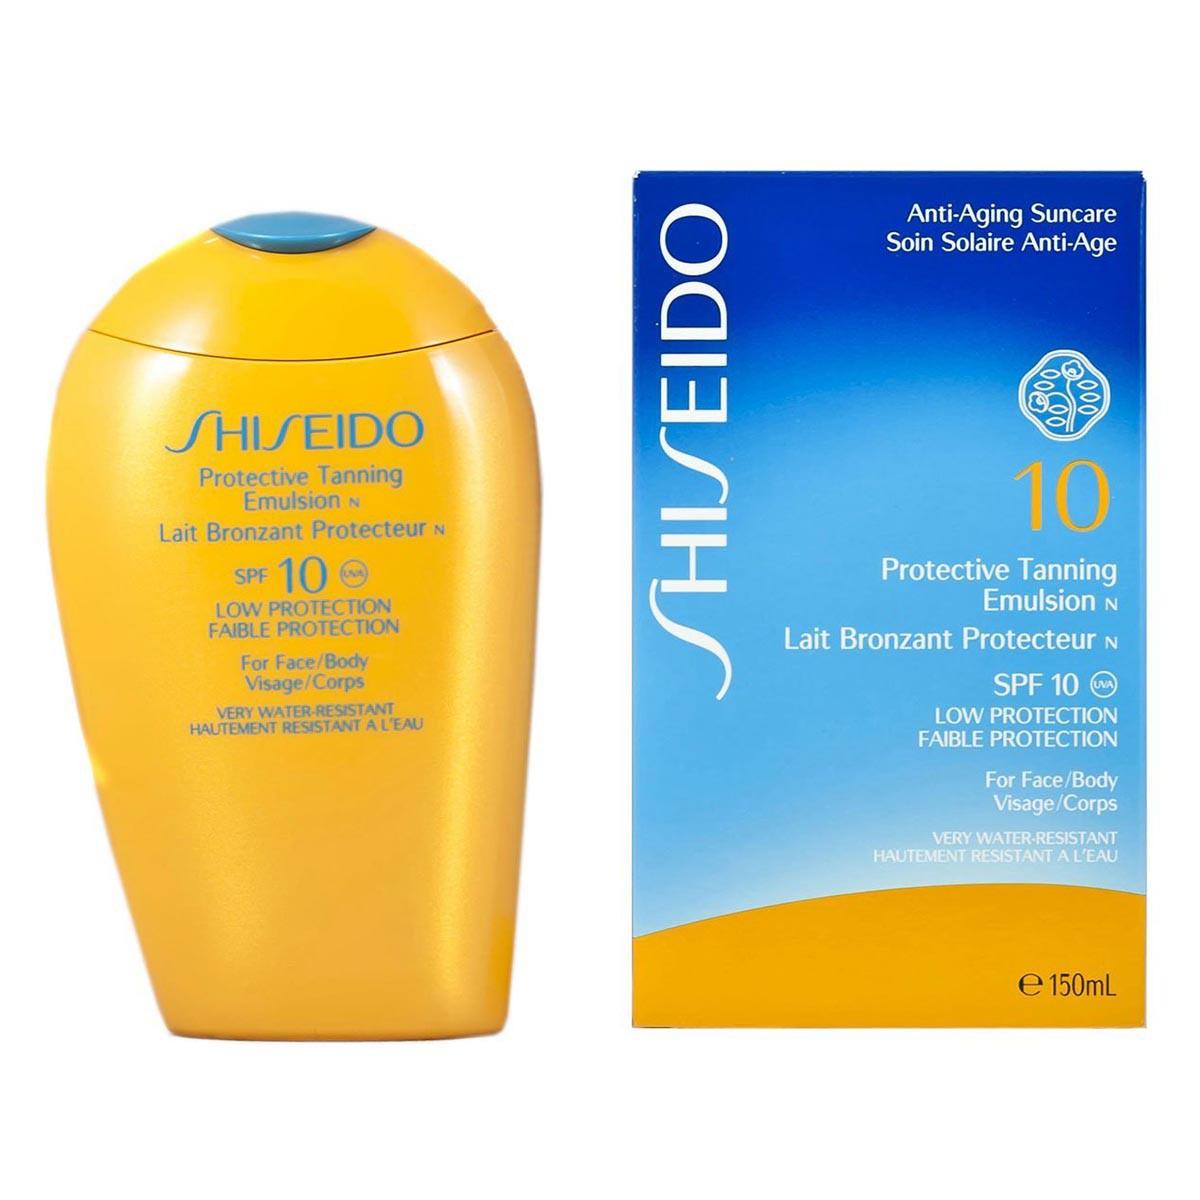 shiseido-antiaging-suncare-protective-tanning-emulsion-spf10-150ml